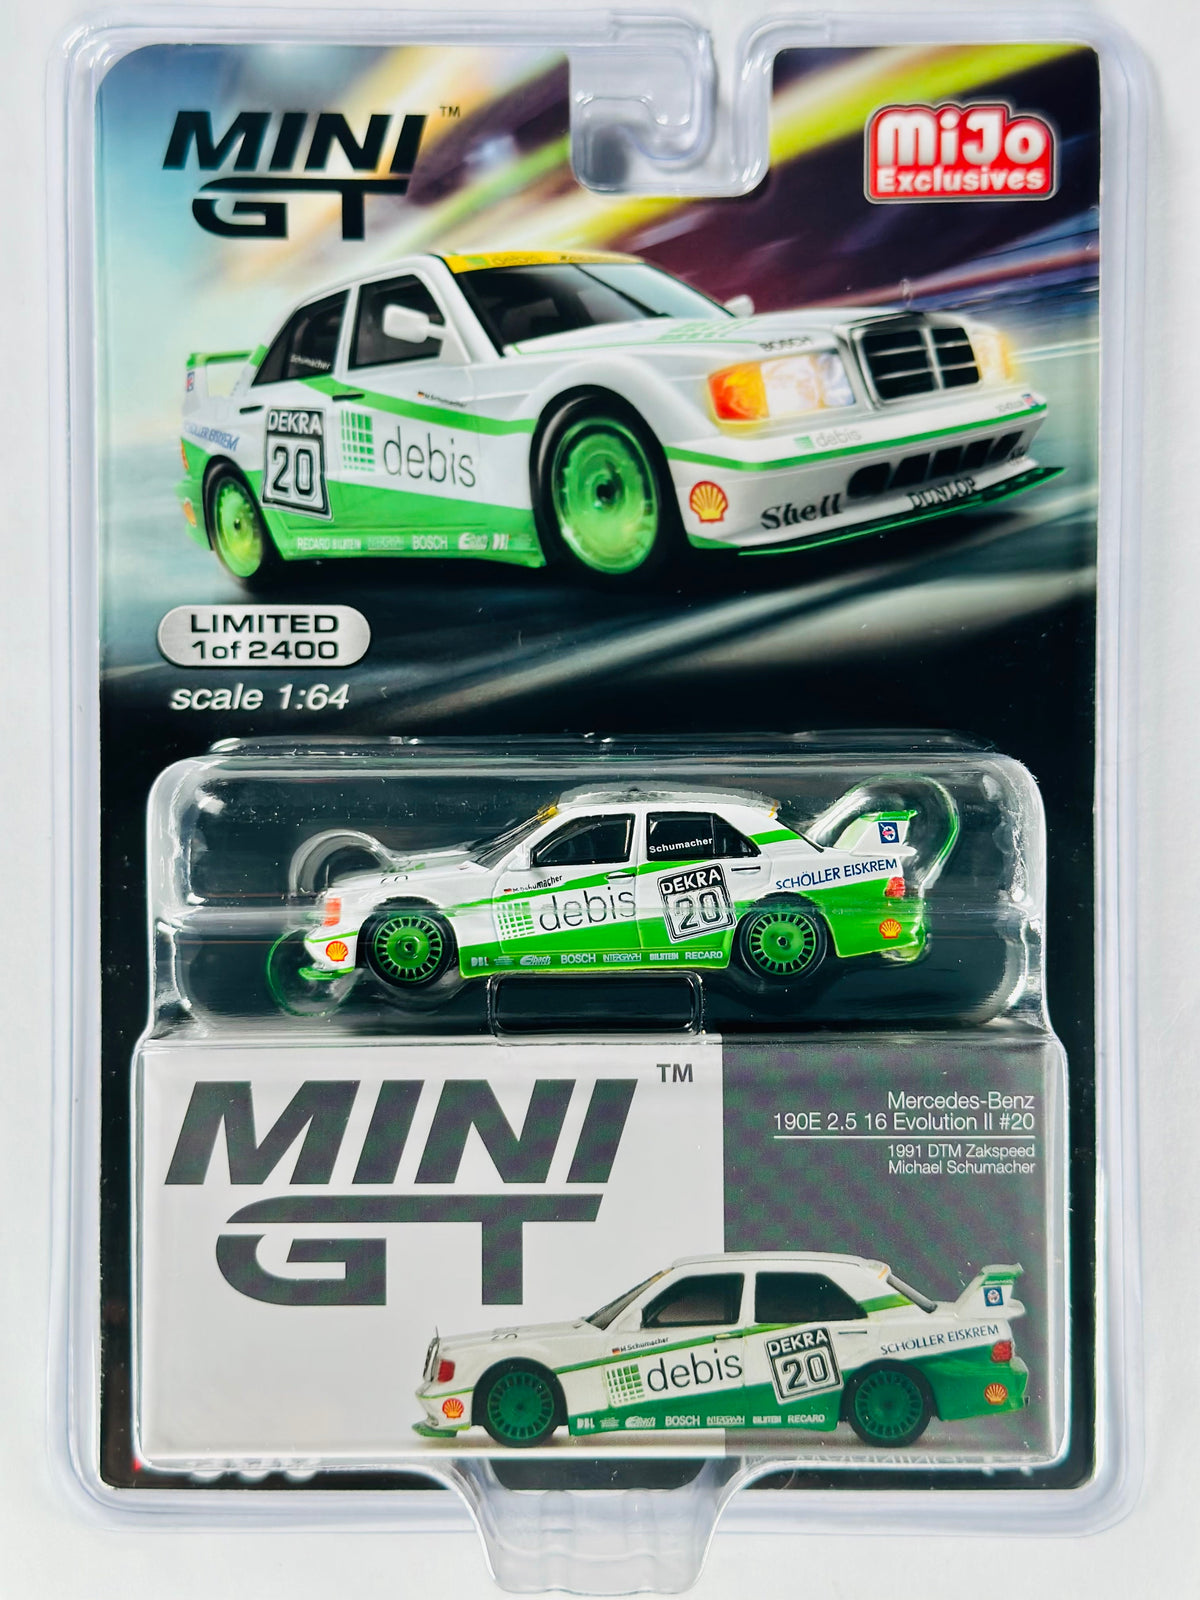 Mini GT Mijo Exclusives Mercedes-Benz 190E 2.5 16 Evolution II #20 1991 DTM  Zakspeed Michael Schumacher #366